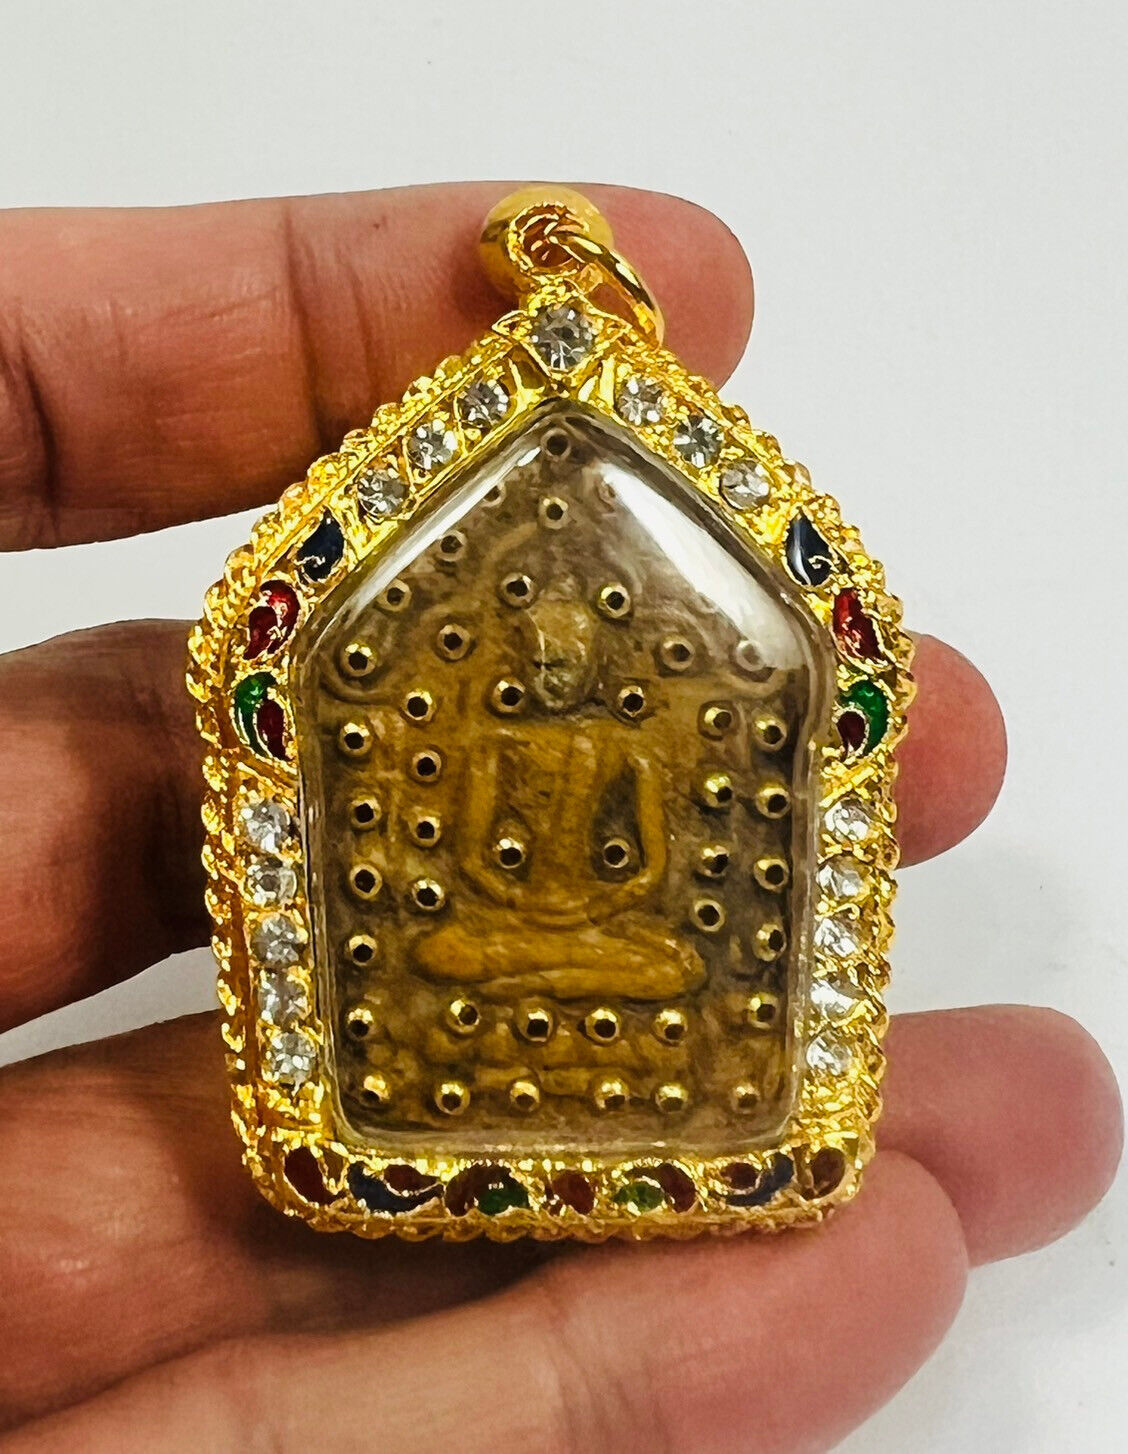 Khunpaen Prai Kuman Lp tim embed gold takrut charm love attraction wealth amulet